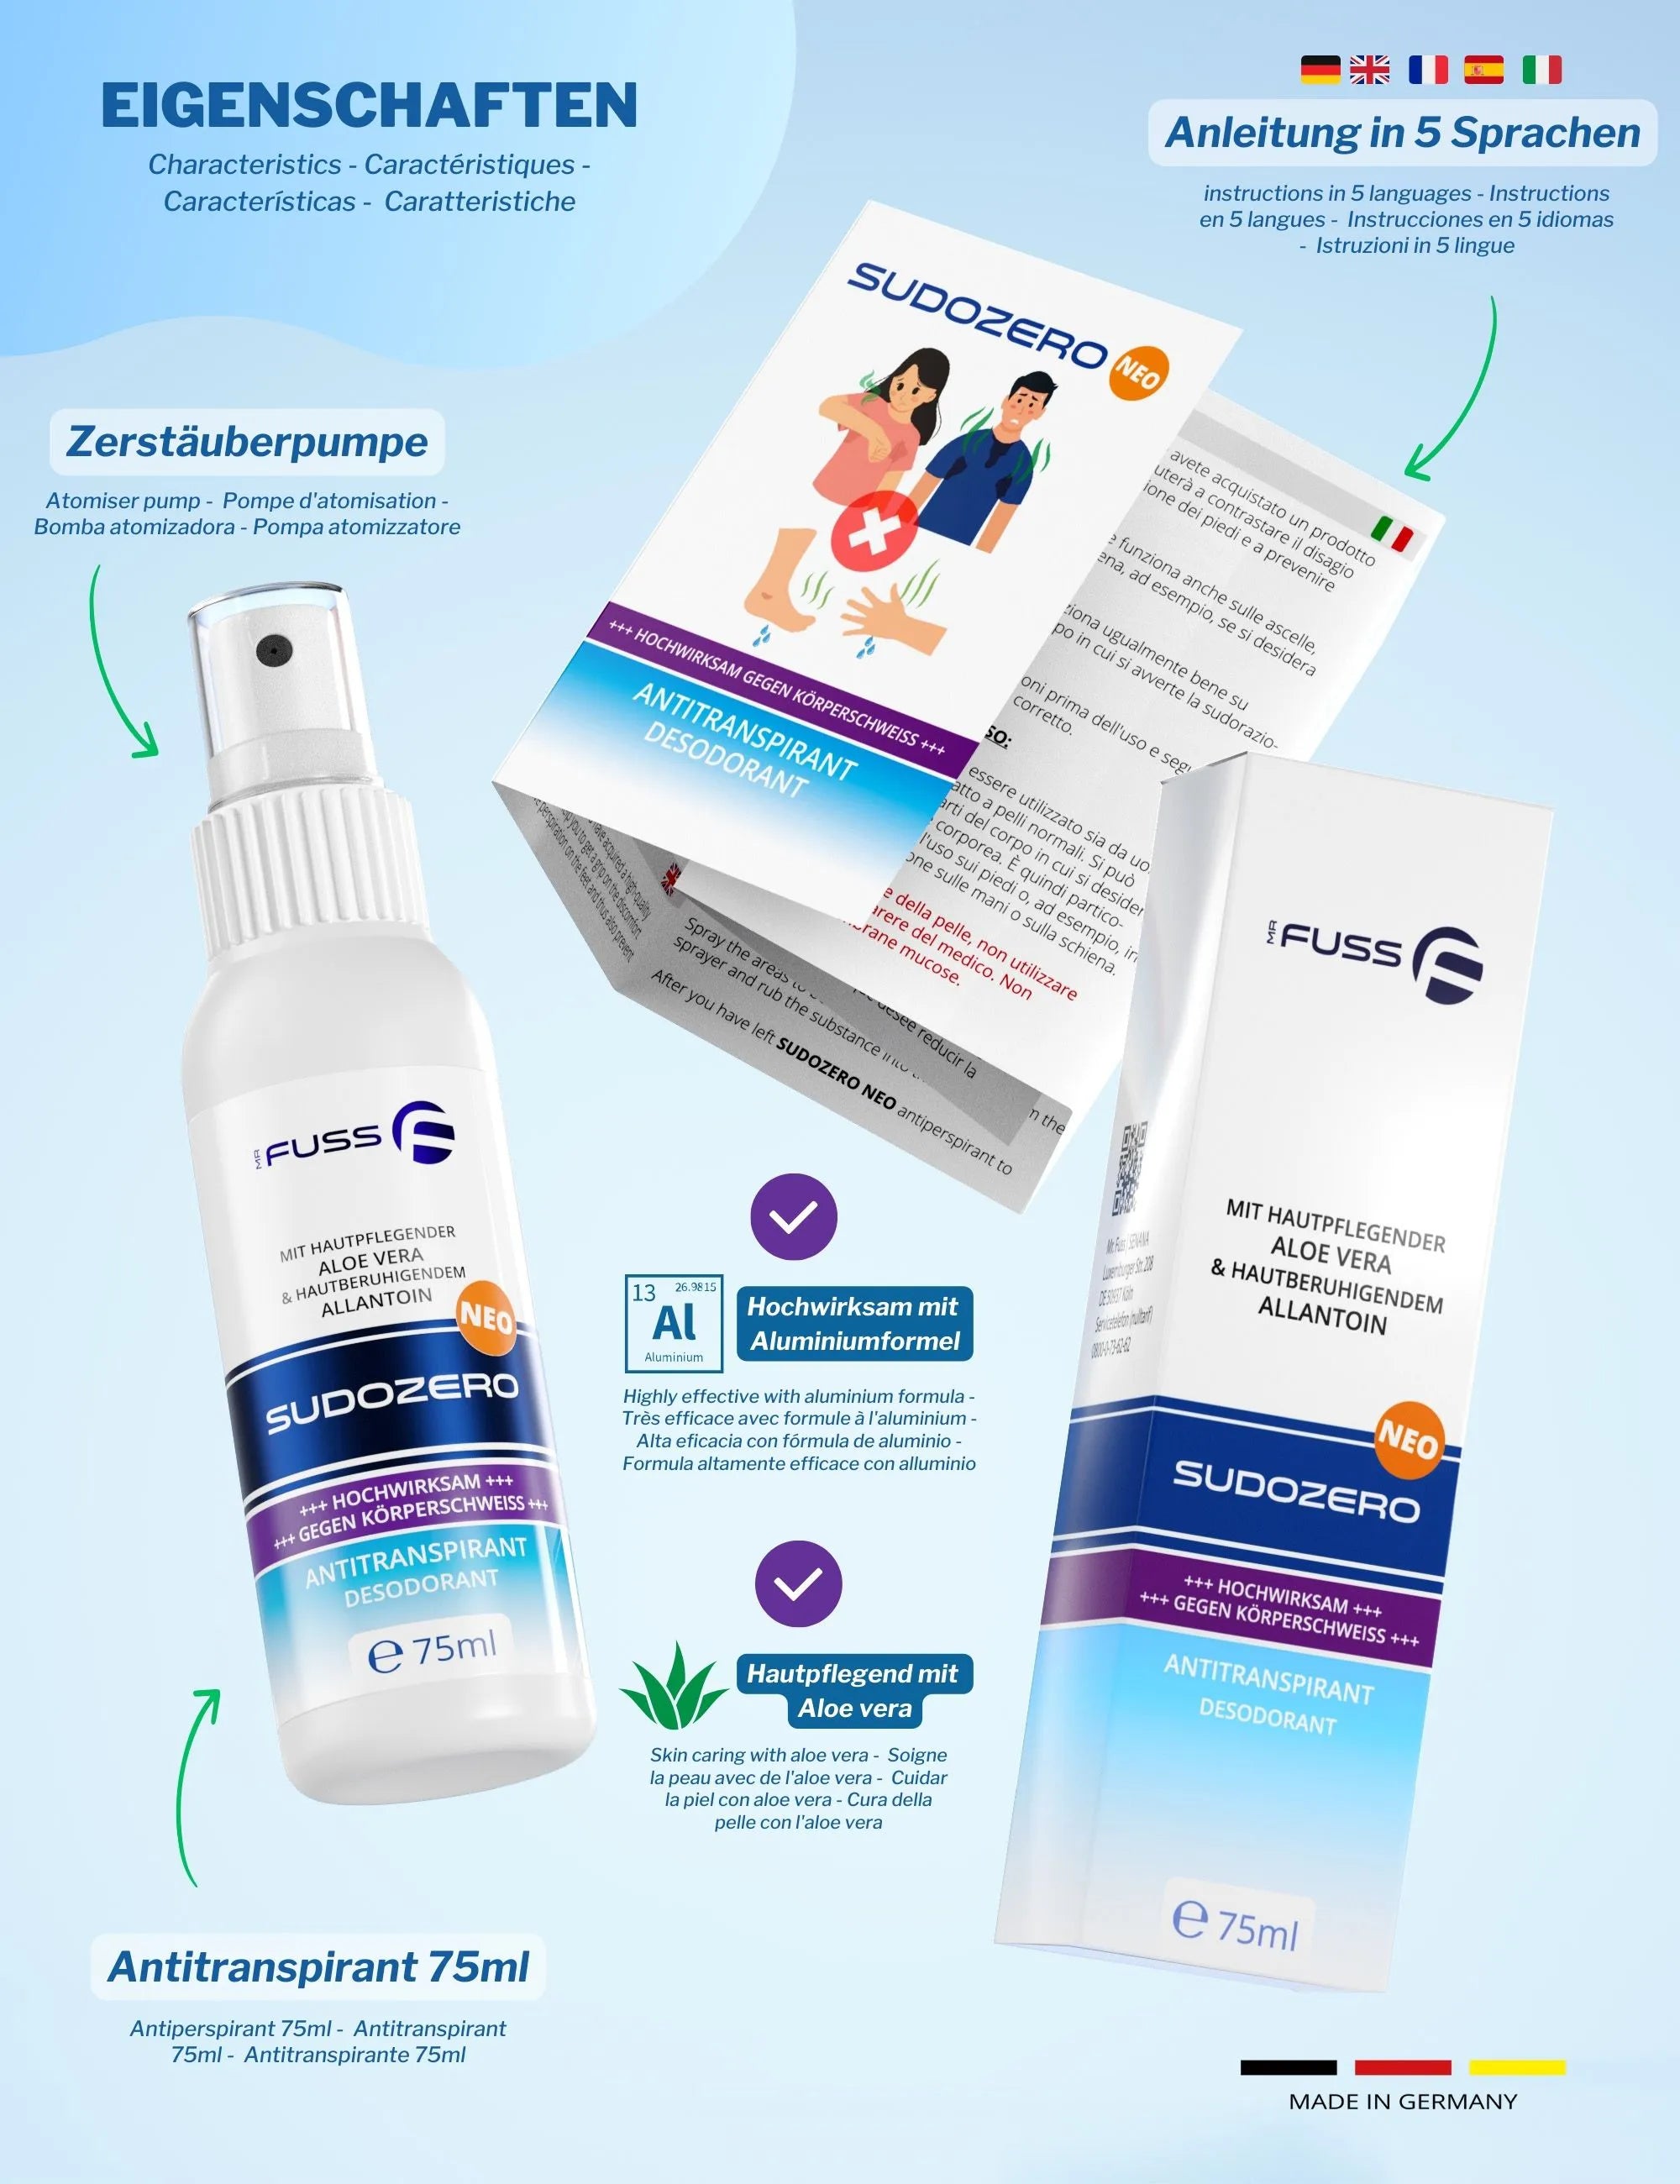 SUDOZERO Neo - Antitranspirant / Desodorant - 75ml